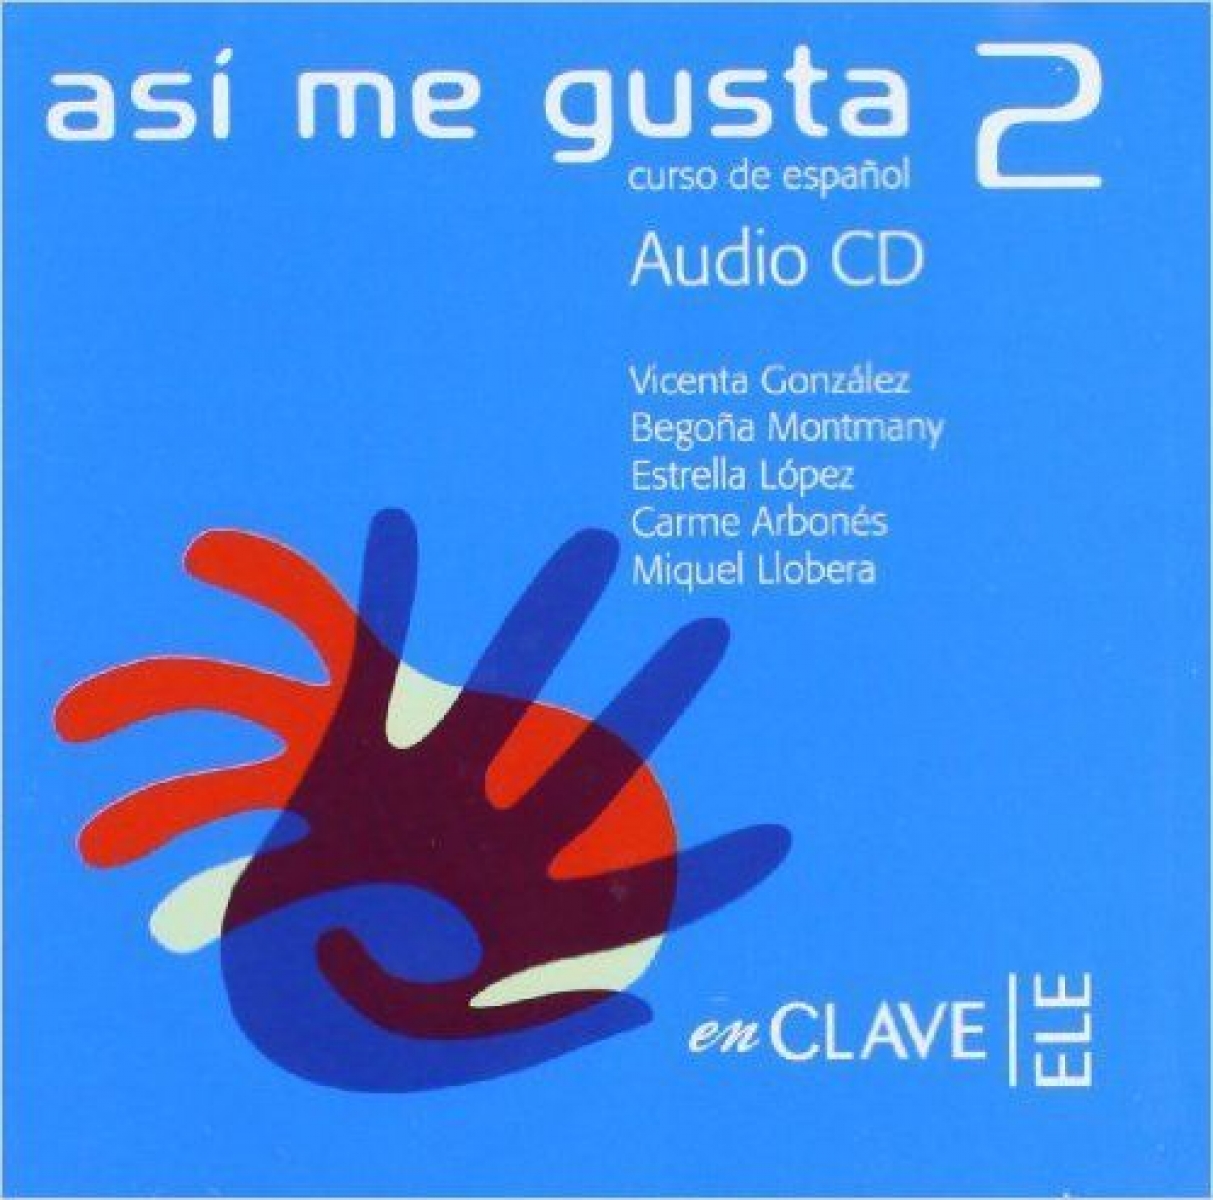 M. Llobera, E. Lopez, C. Arbones, F. Puig, B. Montmany, V. Gonzalez Asi me gusta 2. Audio para la clase () 